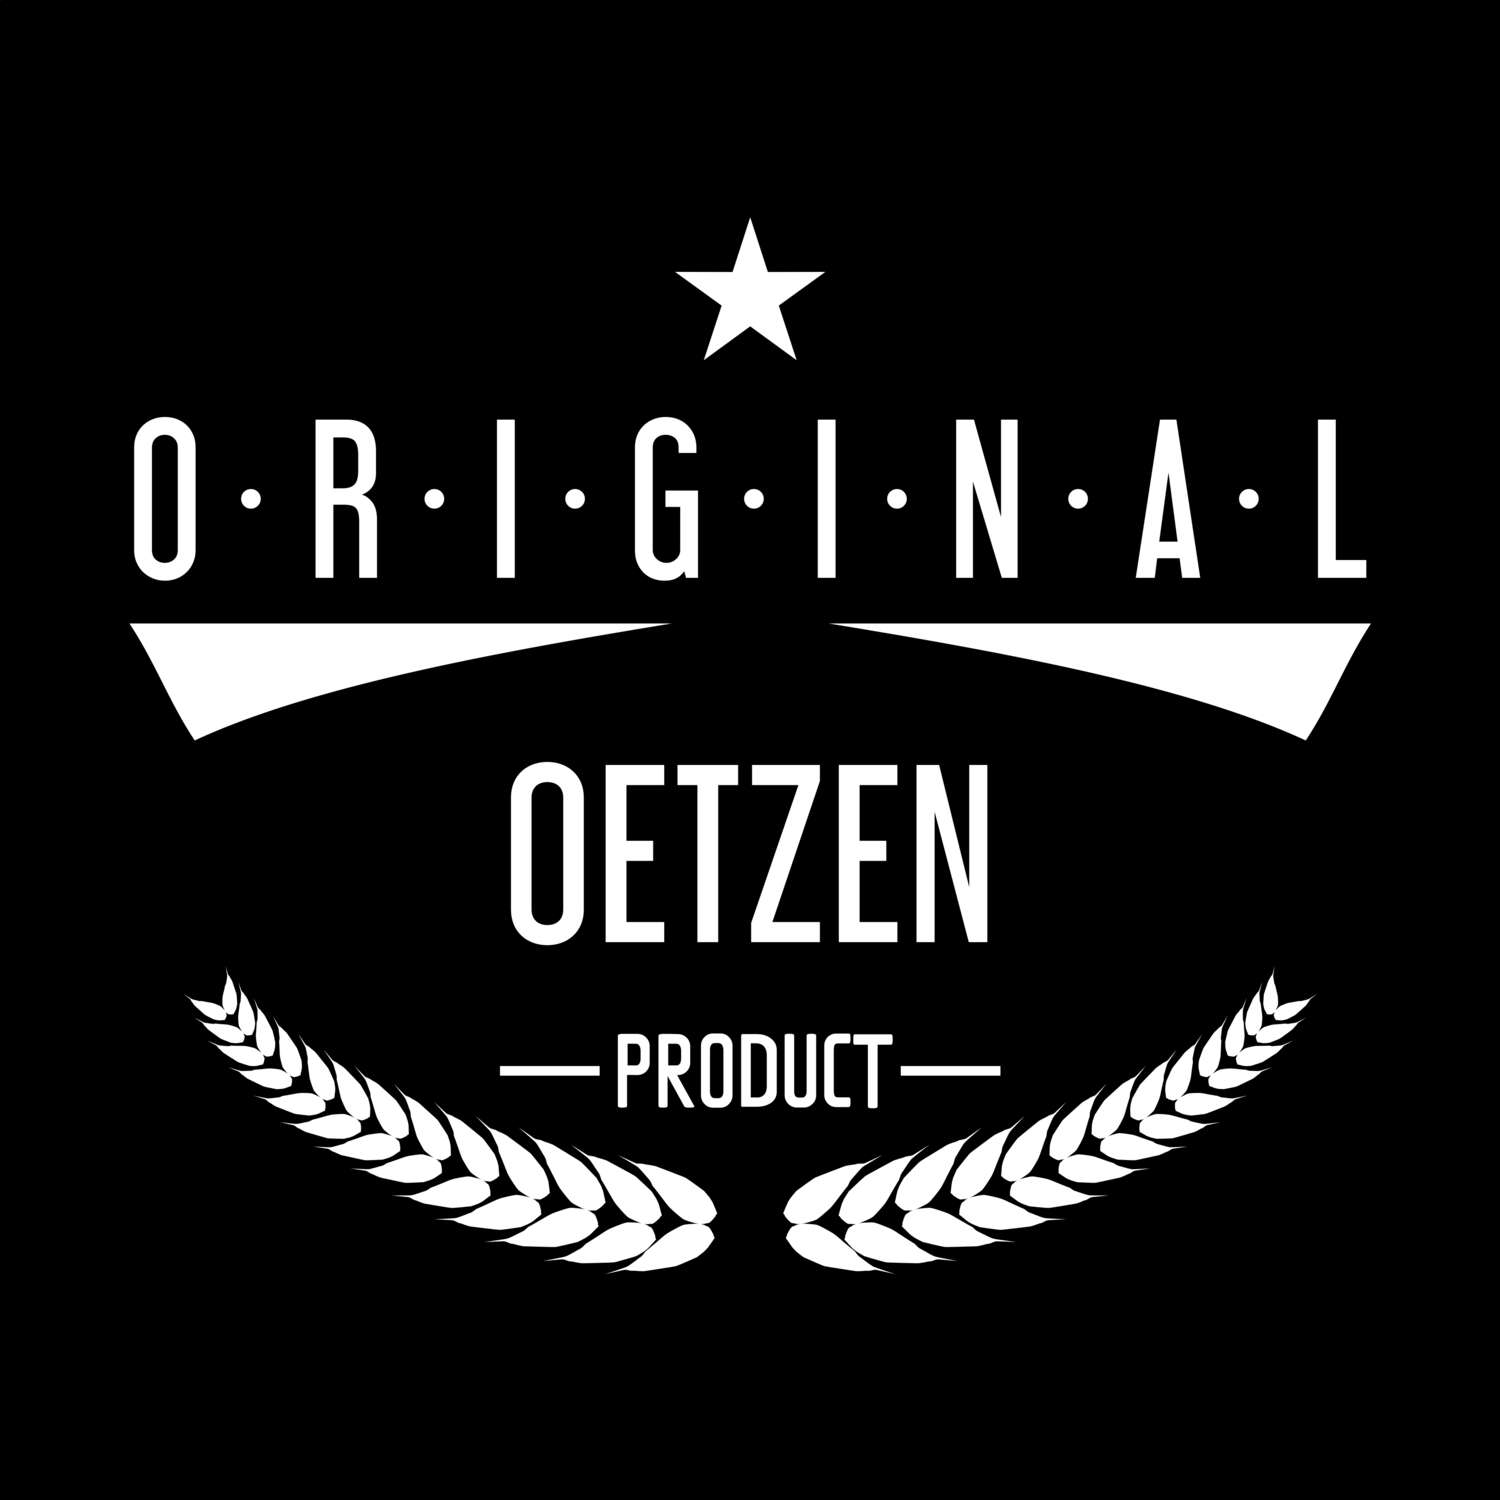 Oetzen T-Shirt »Original Product«